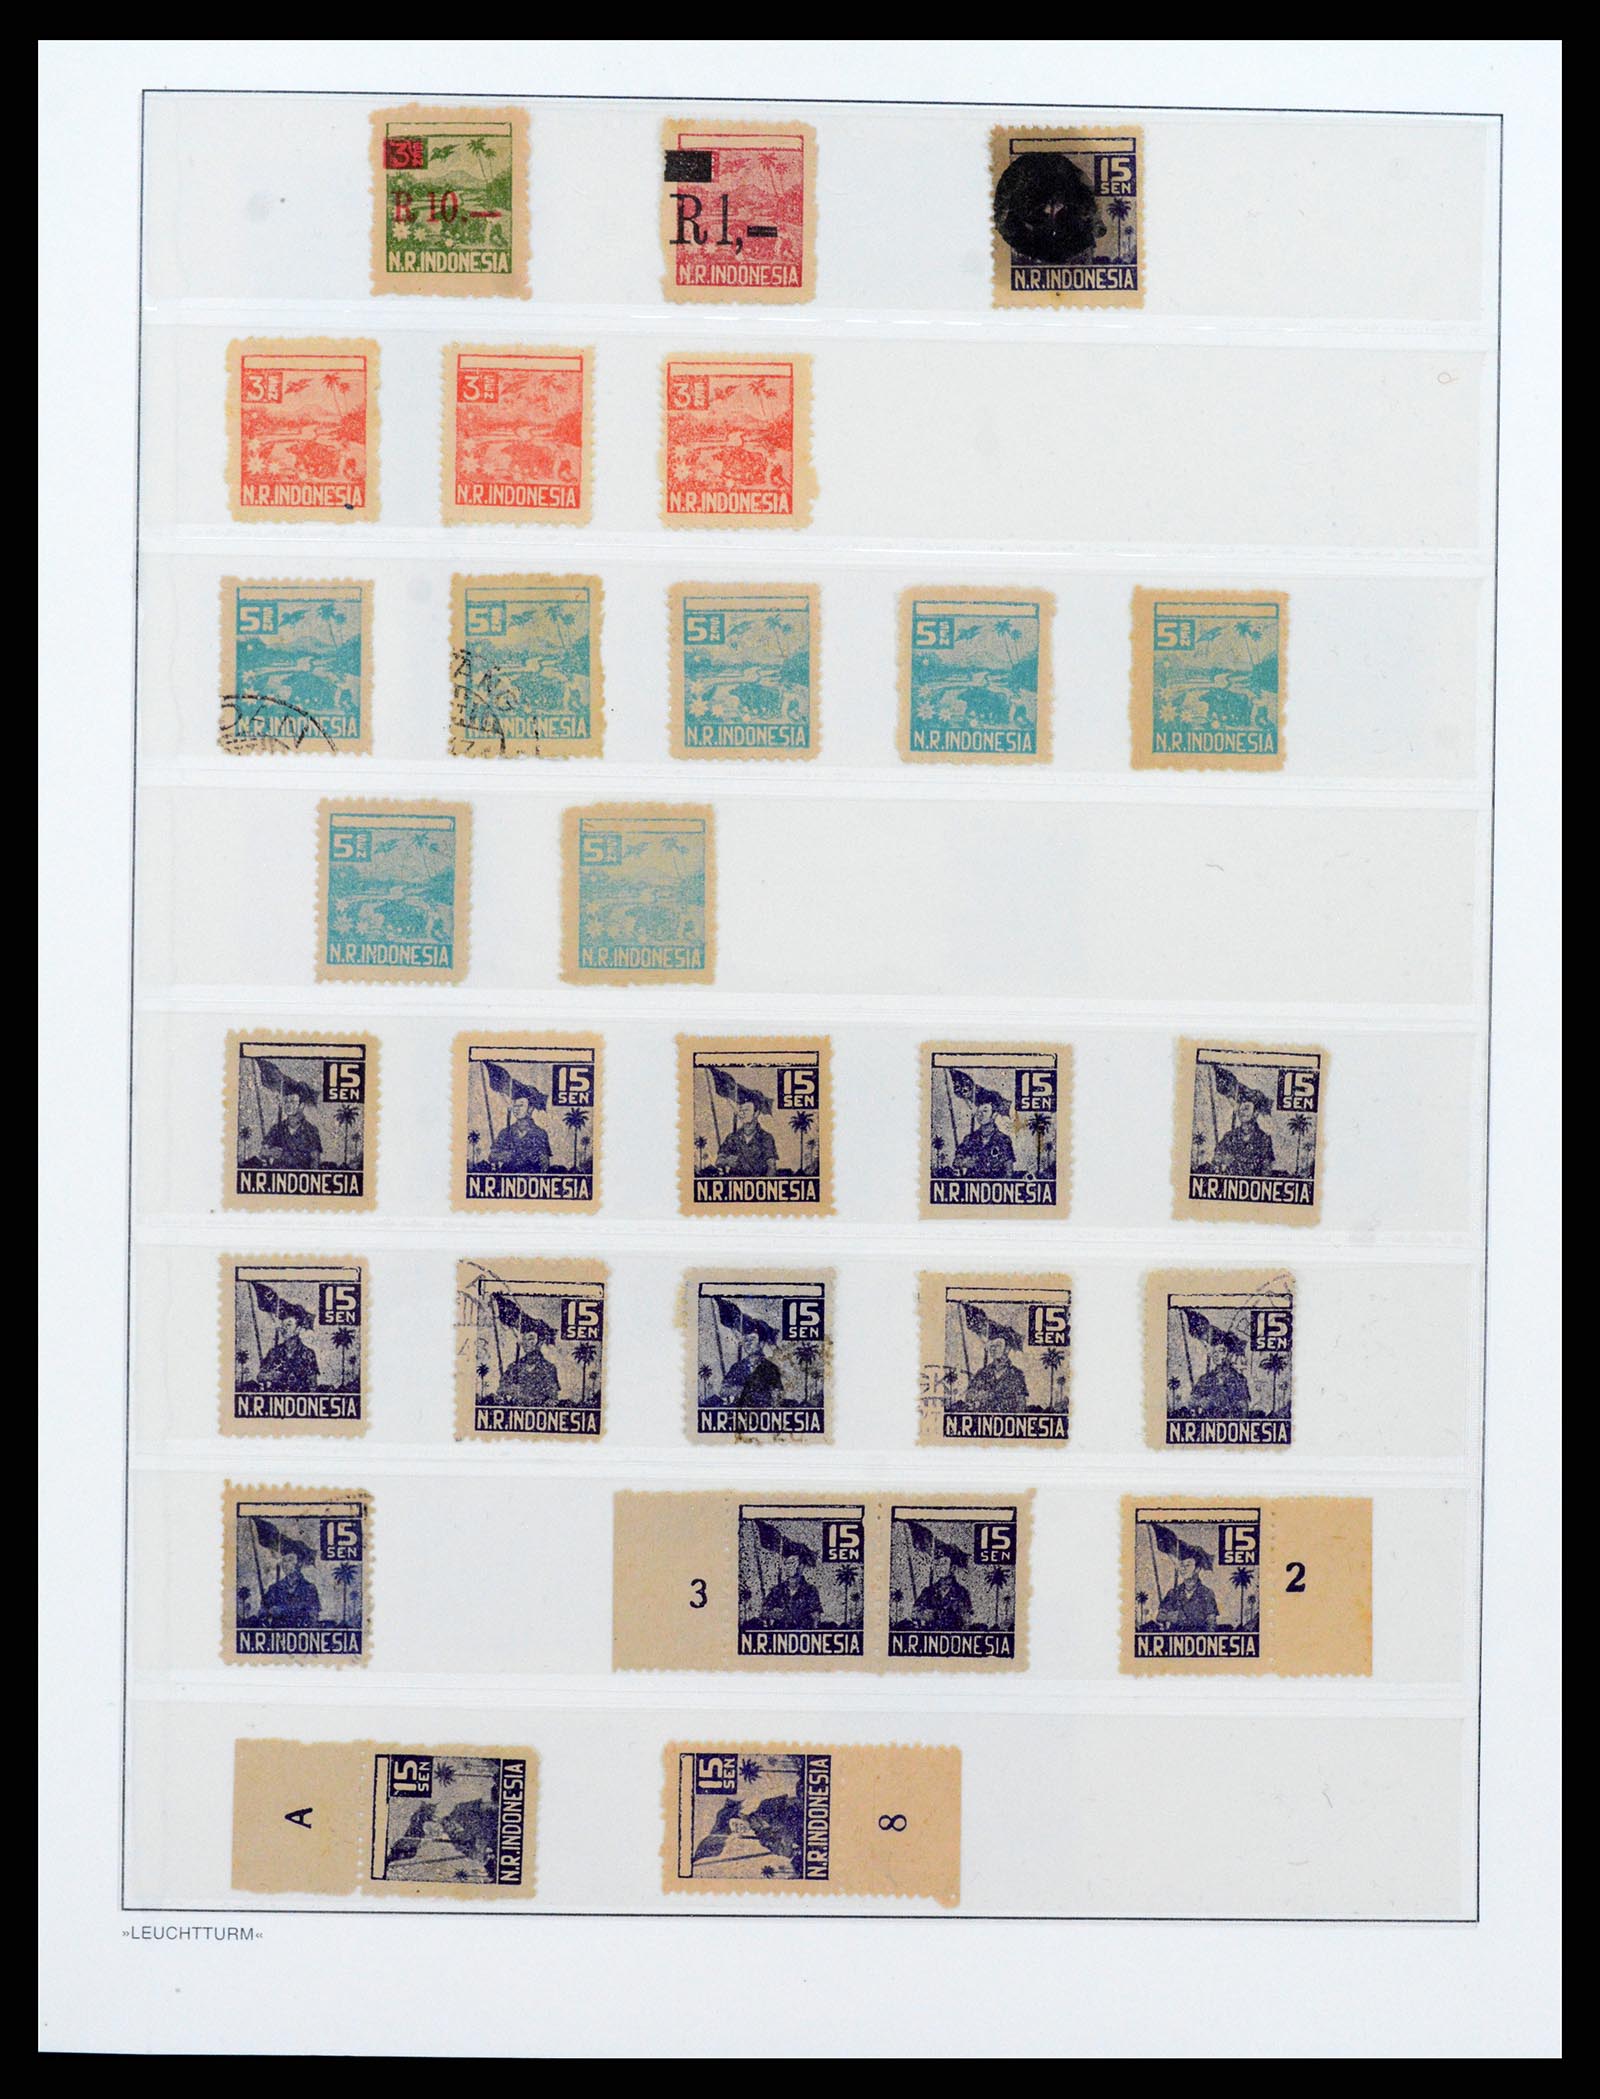 37435 050 - Stamp collection 37435 Indonesia interim period 1945-1948.